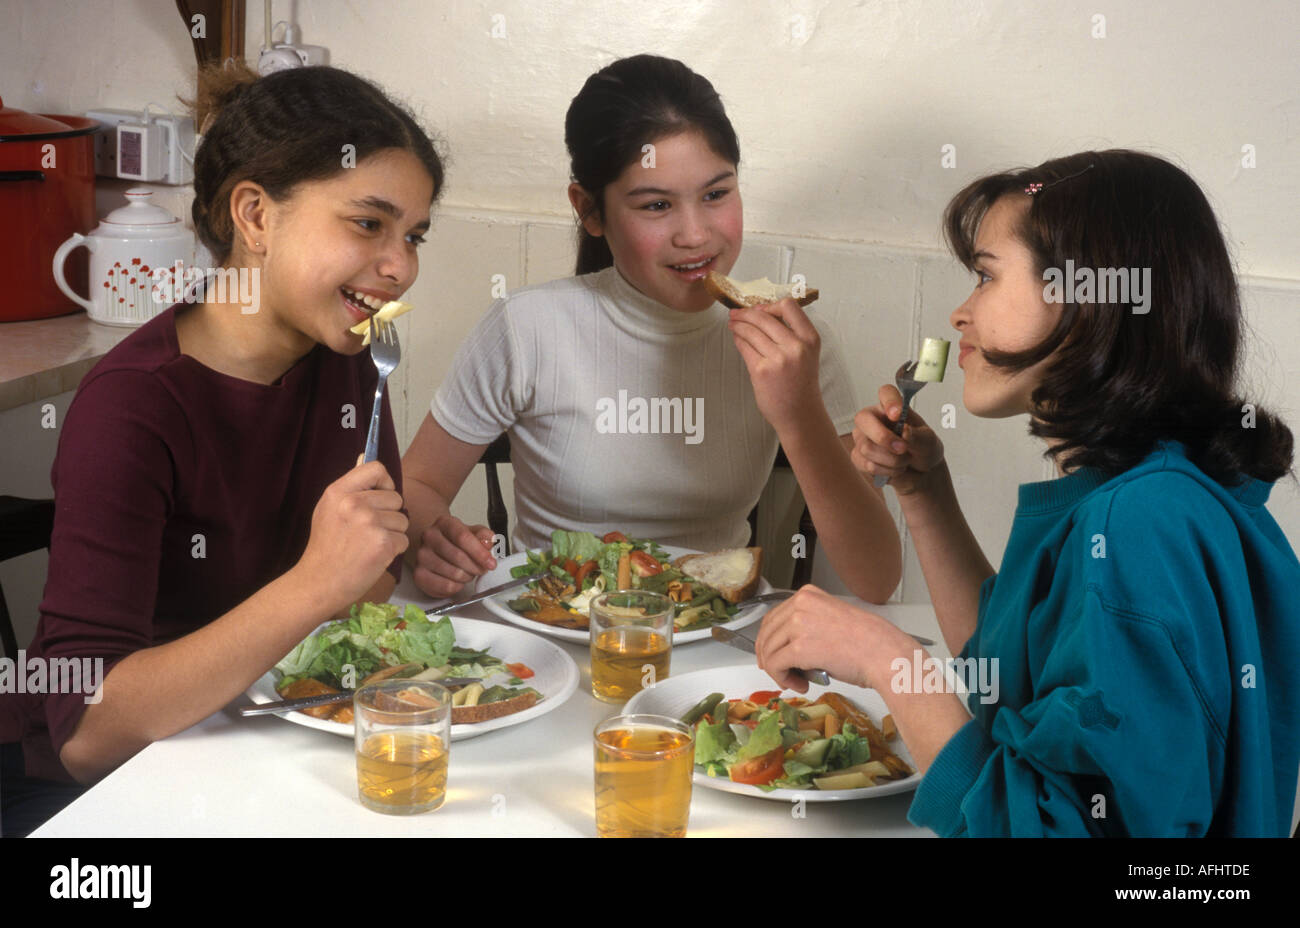 3 young teenage girls eating healthy food Stock Photo